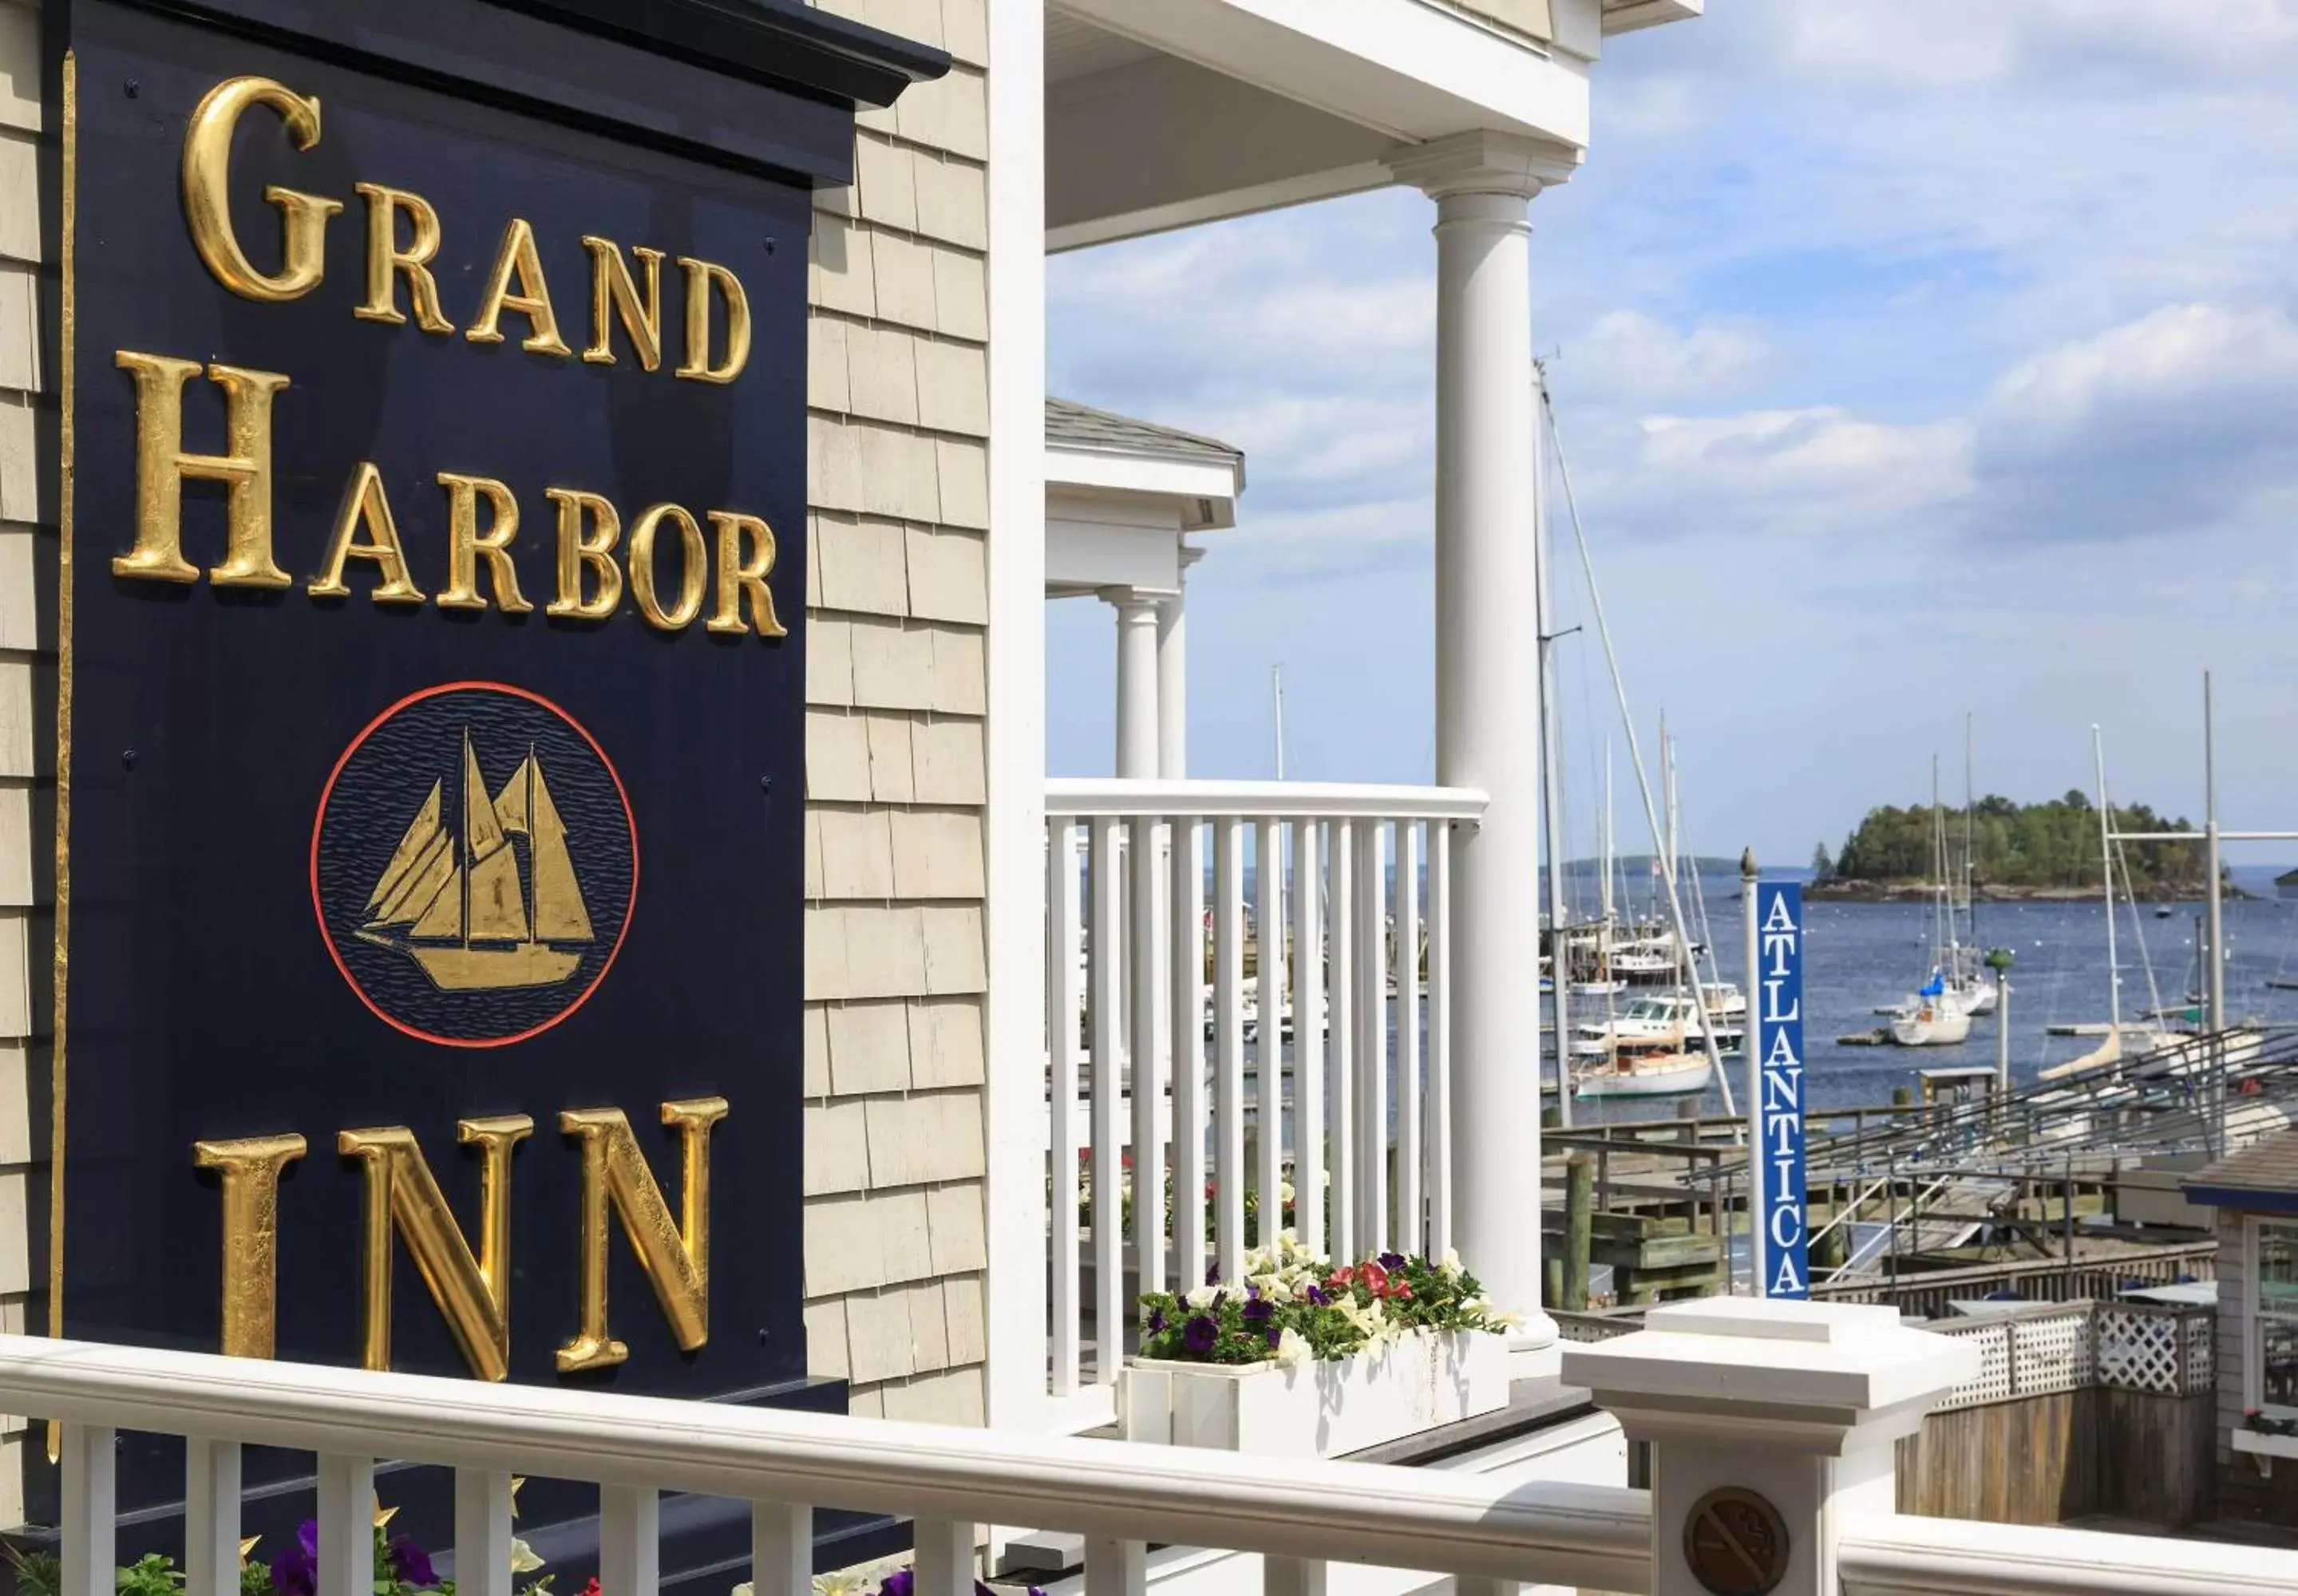 Day in Grand Harbor Inn